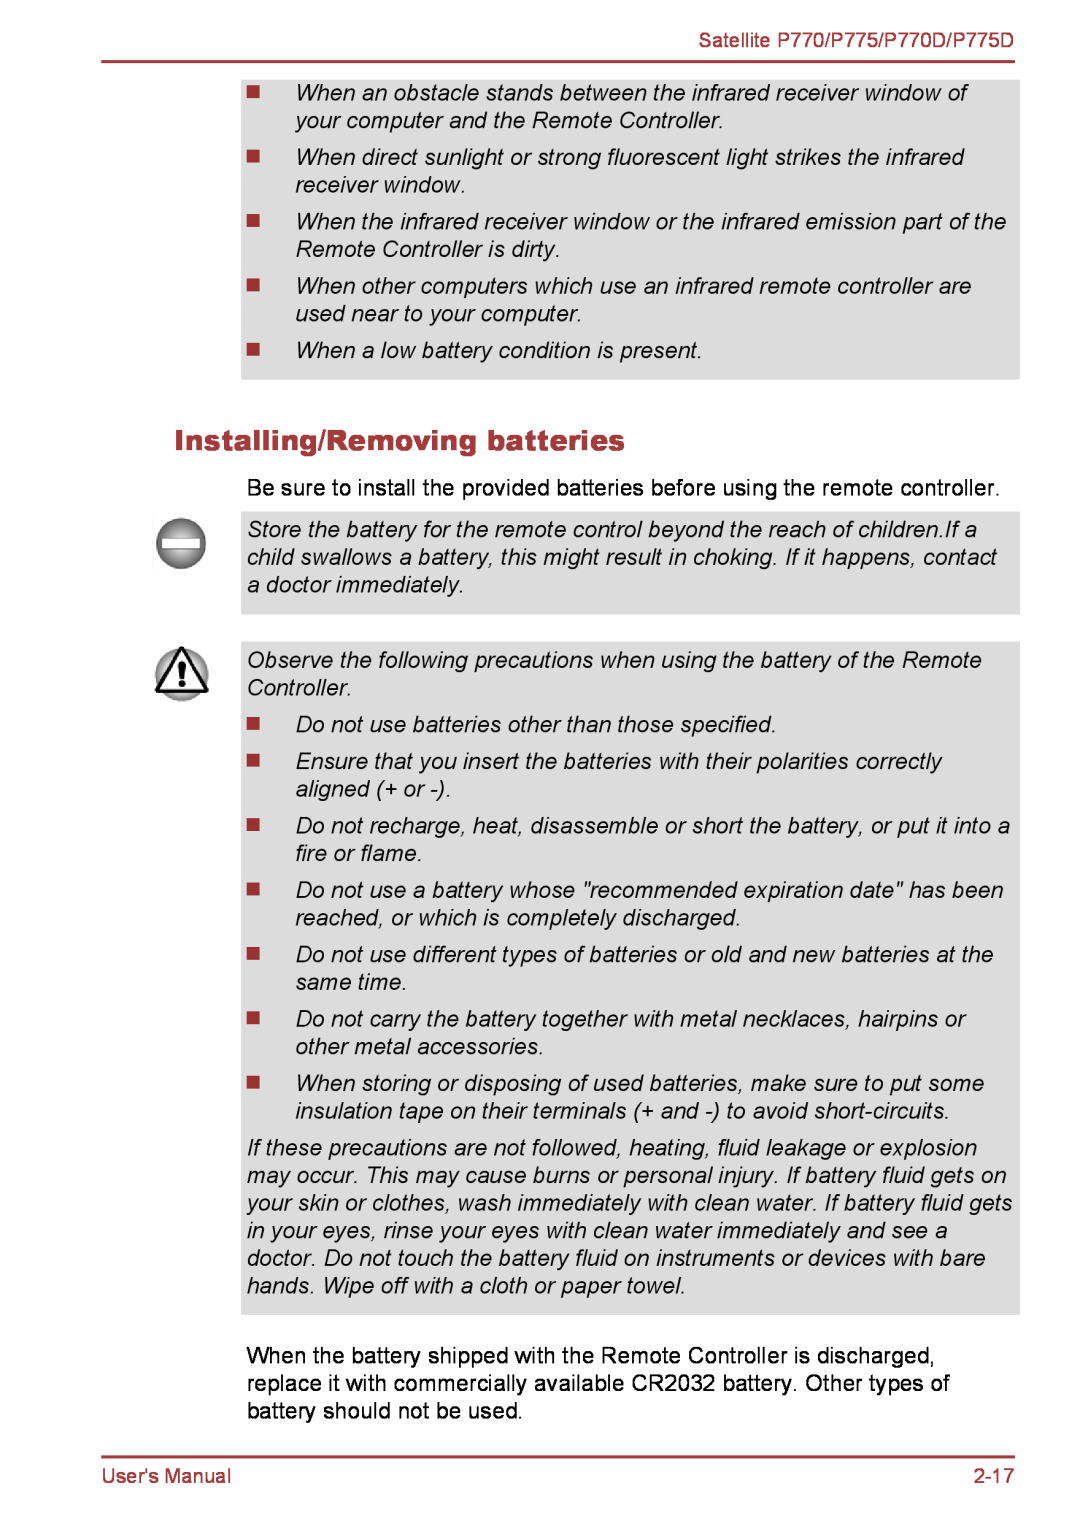 Toshiba P770 user manual Installing/Removing batteries 